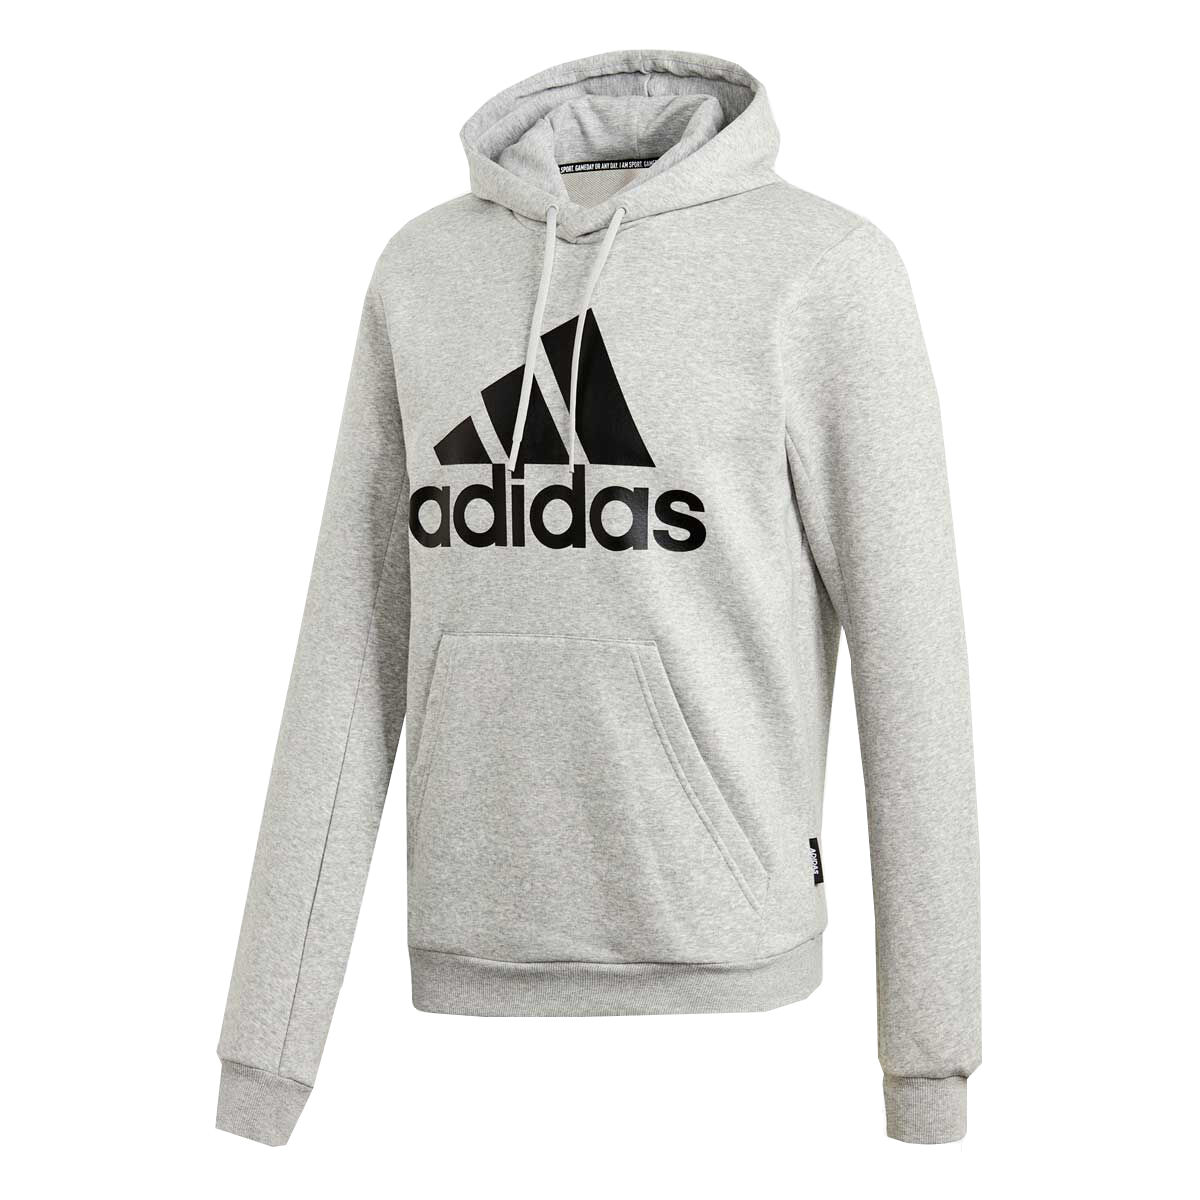 adidas black and white hoodie mens